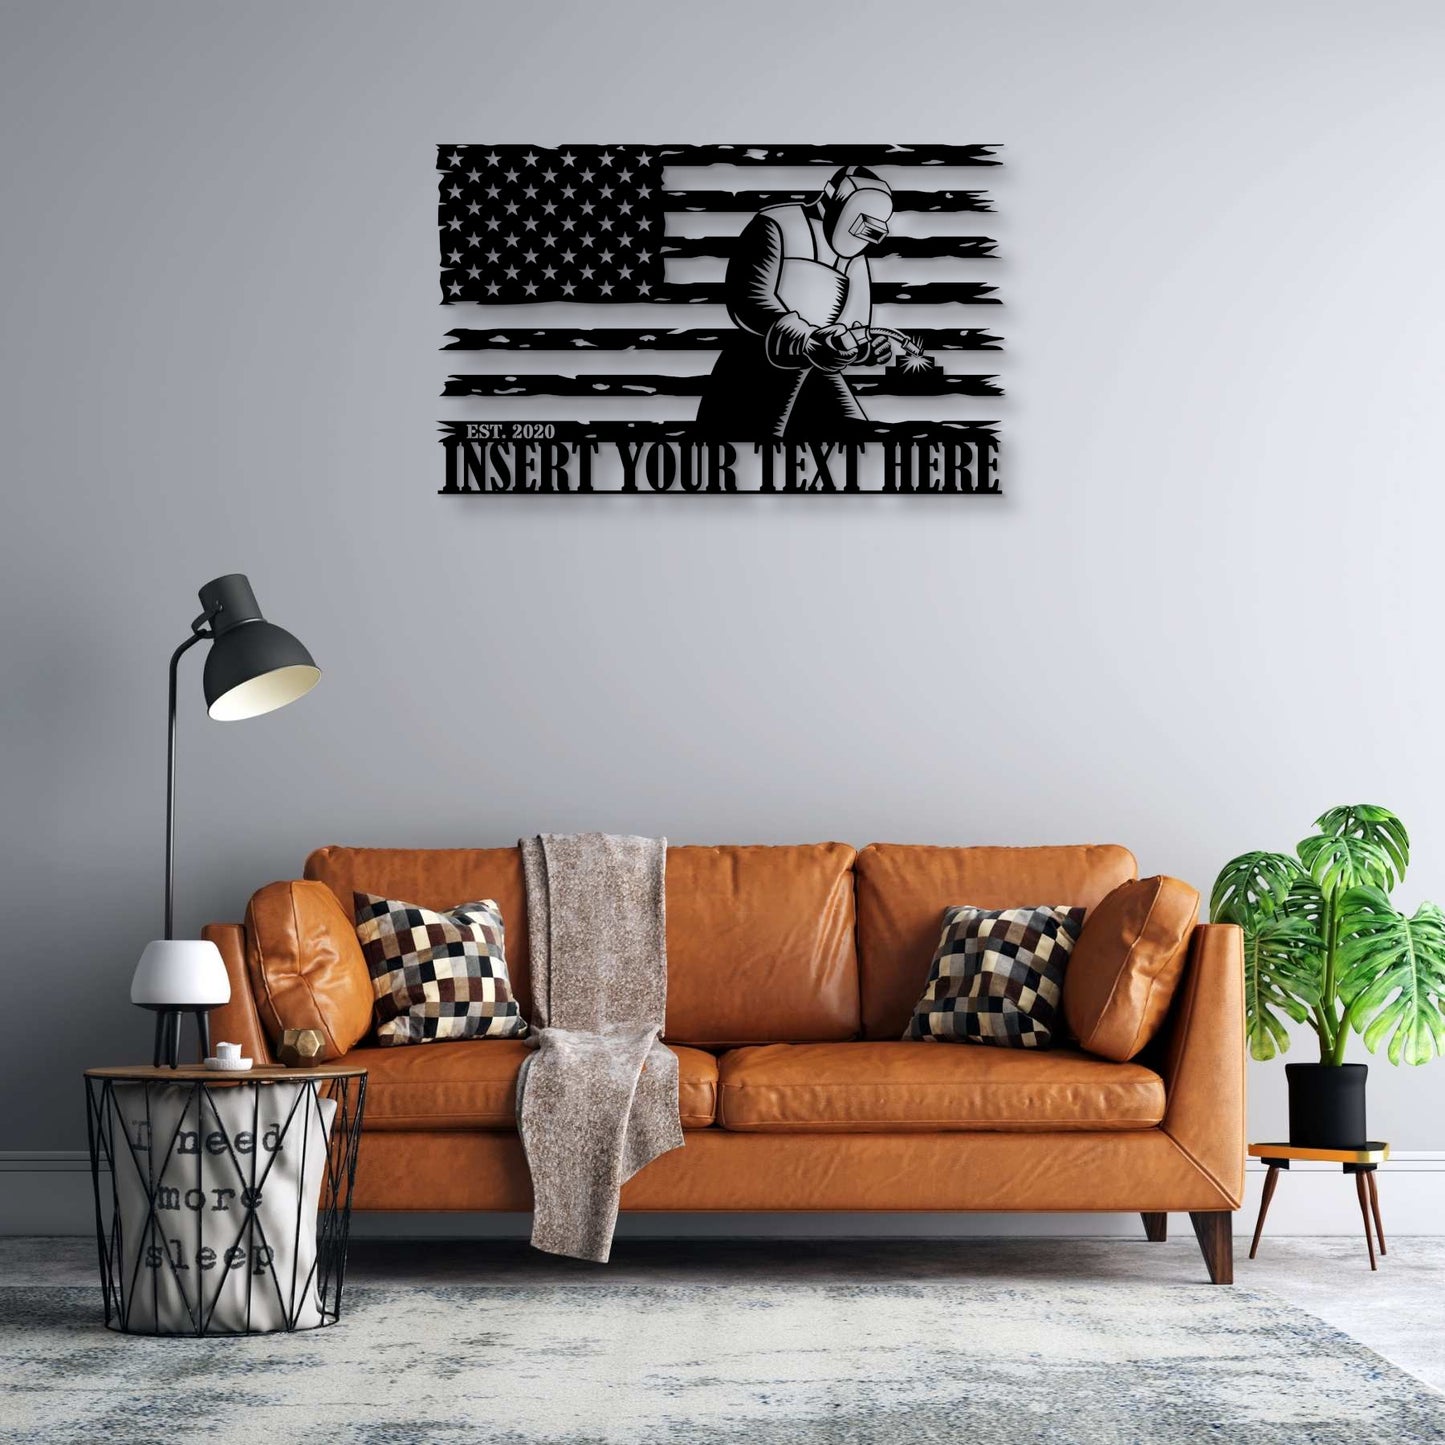 Personalized US Mig Welder Name Metal Sign Gift. Custom Metalworker Portrait. Patriotic American Ironworker Gift. US Metal Shop Wall Hanging